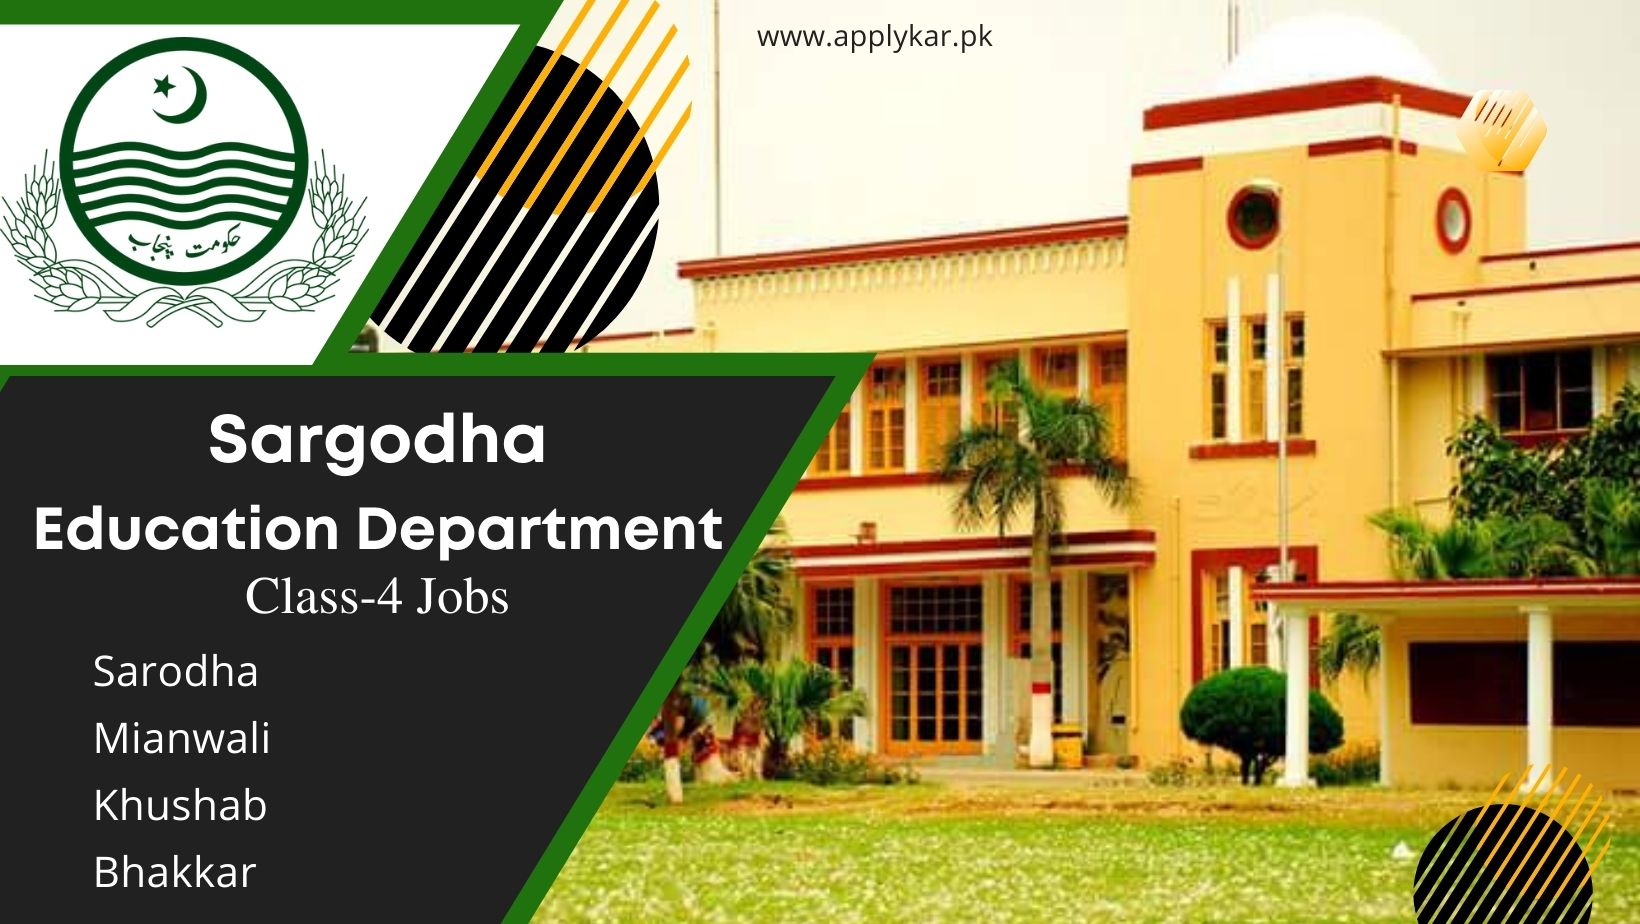 Sargodha Education Department Class IV Jobs | Apply Now